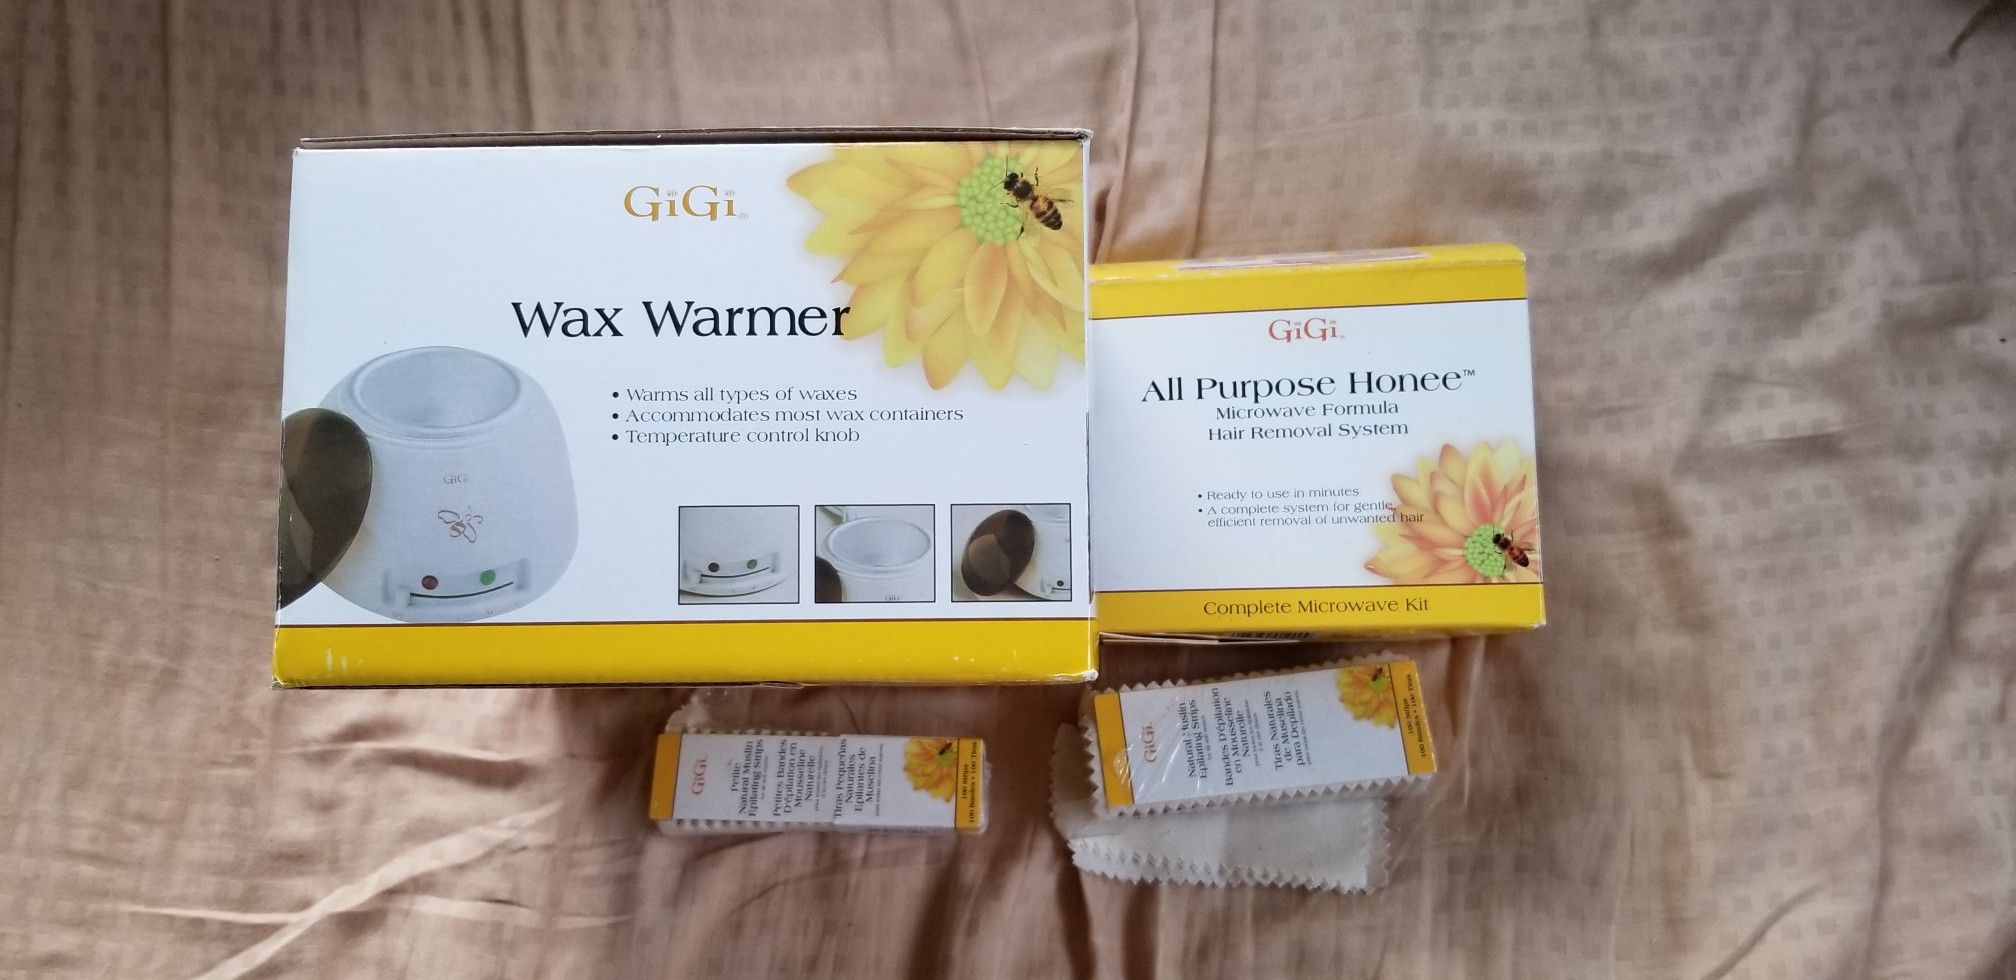 Gigi wax warmer and all purpose honee system, extra muslin